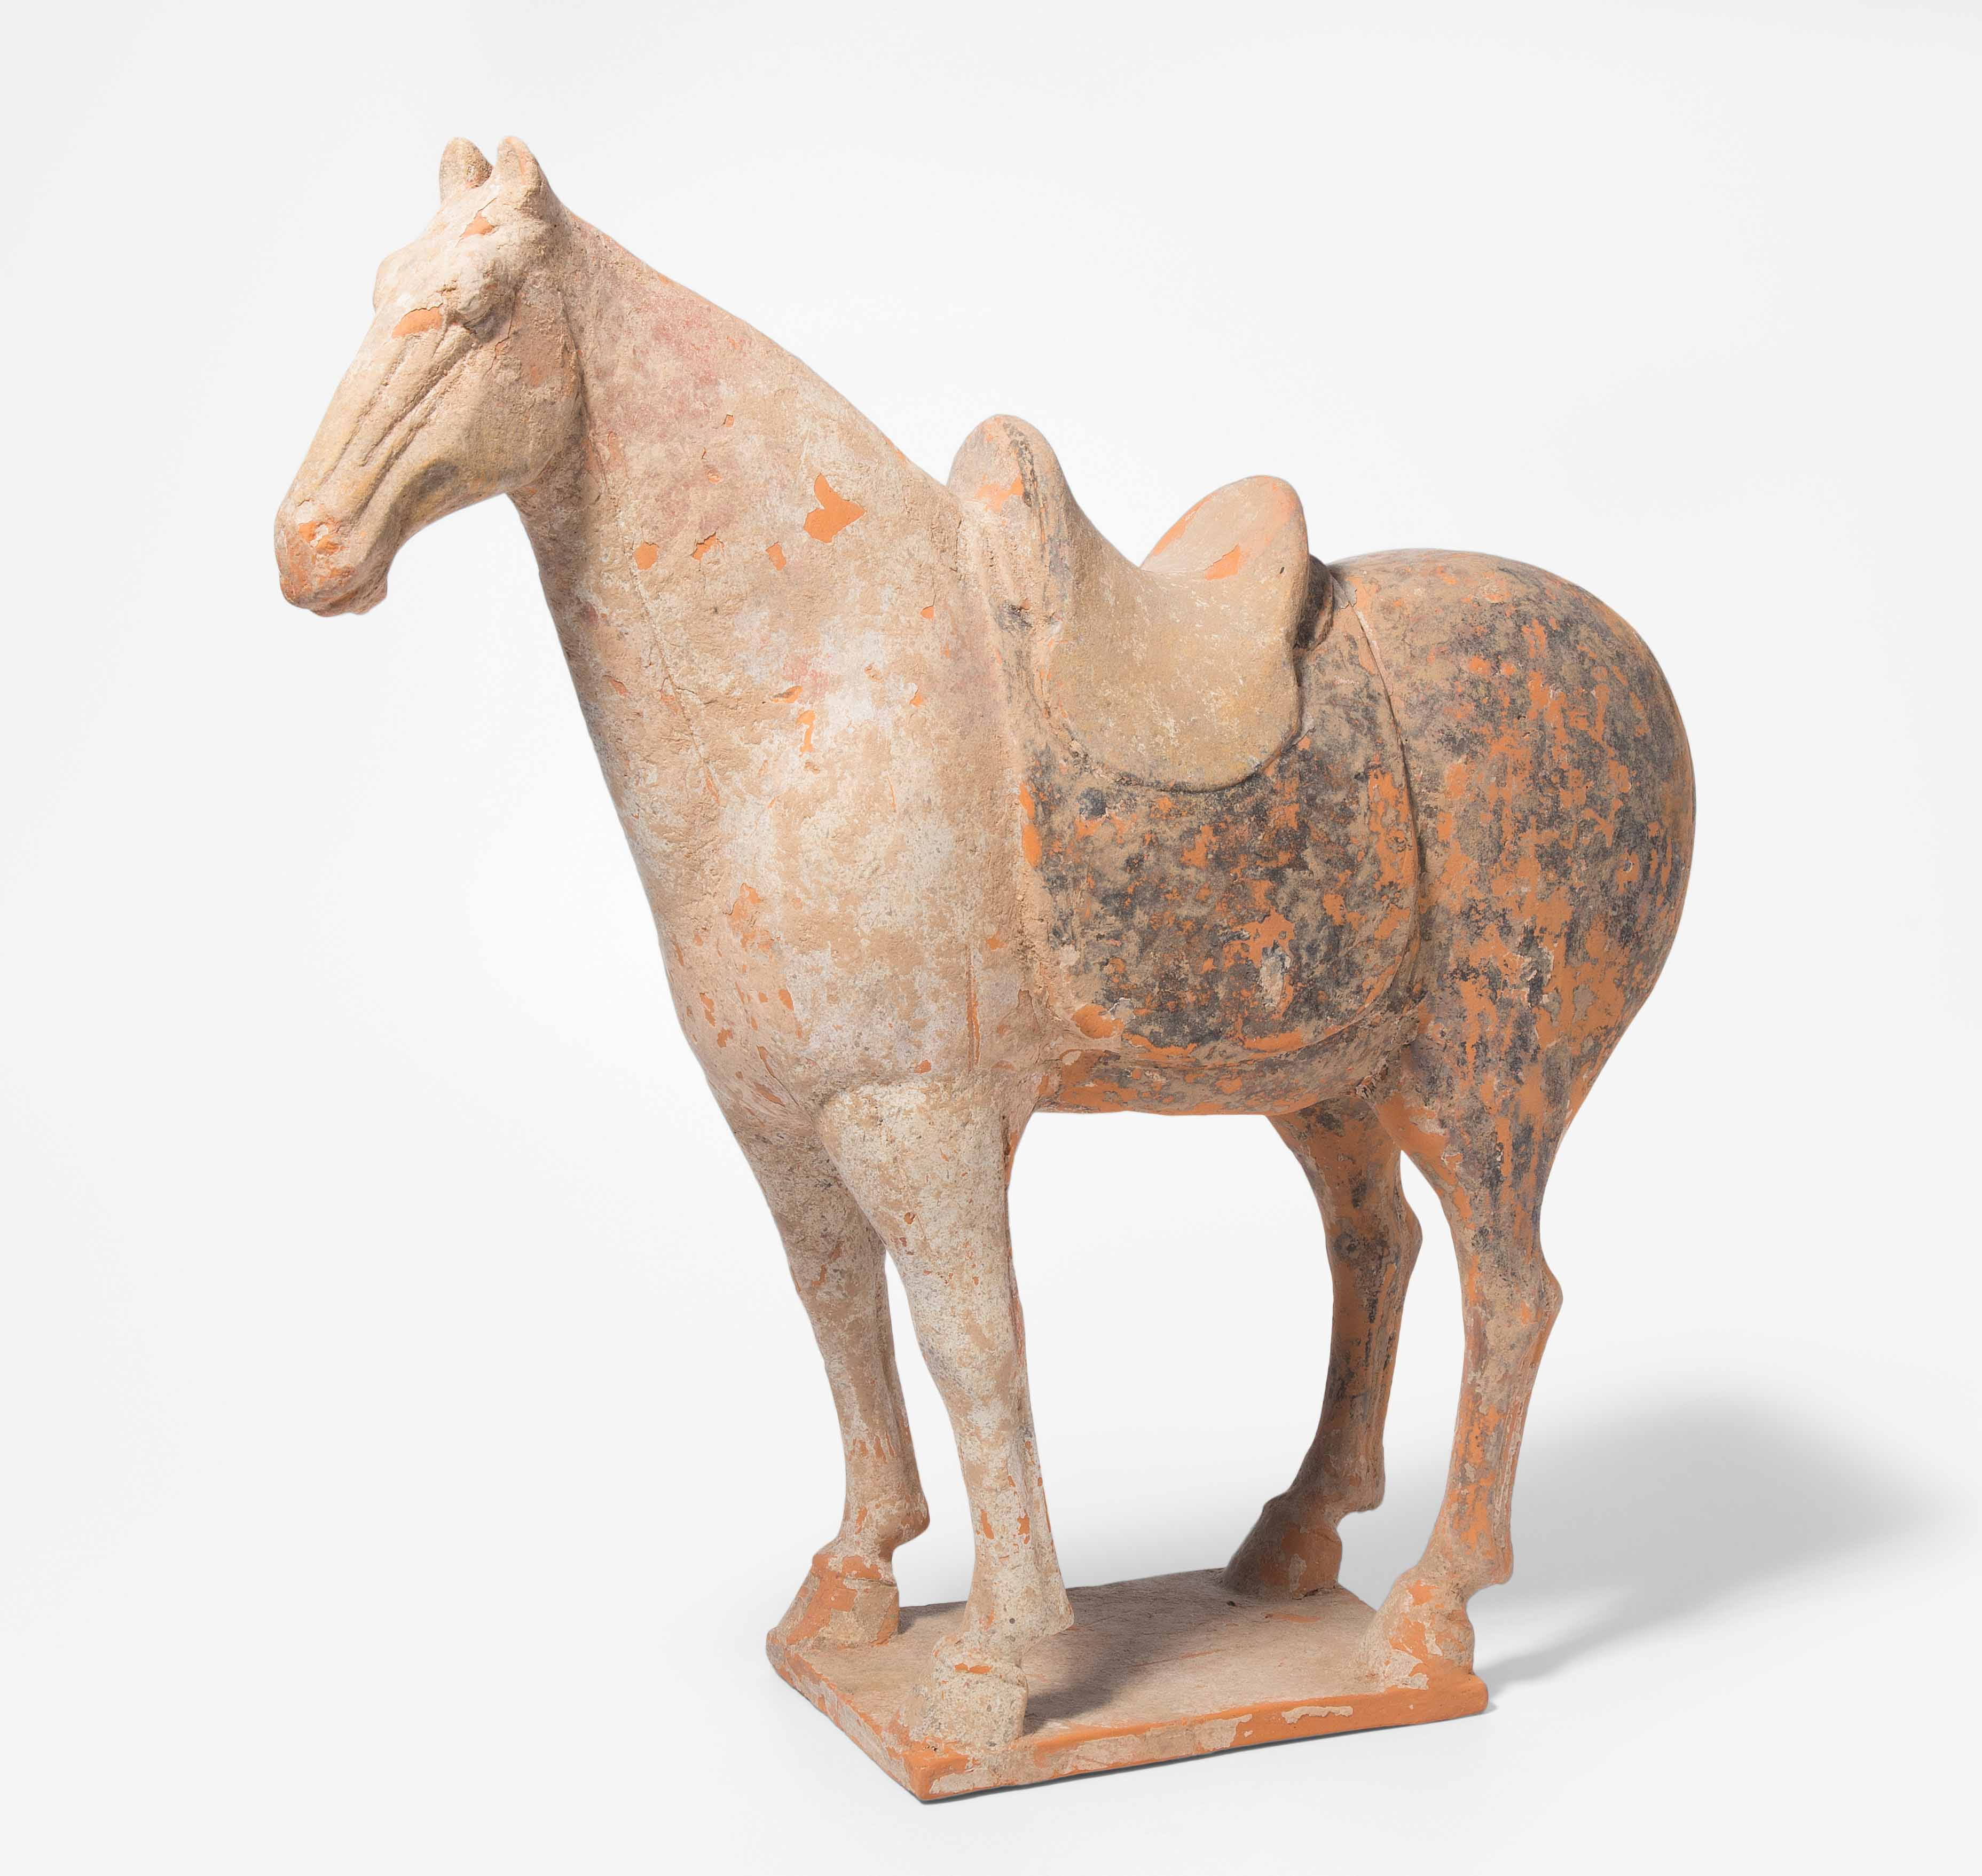 Terracotta-Pferd